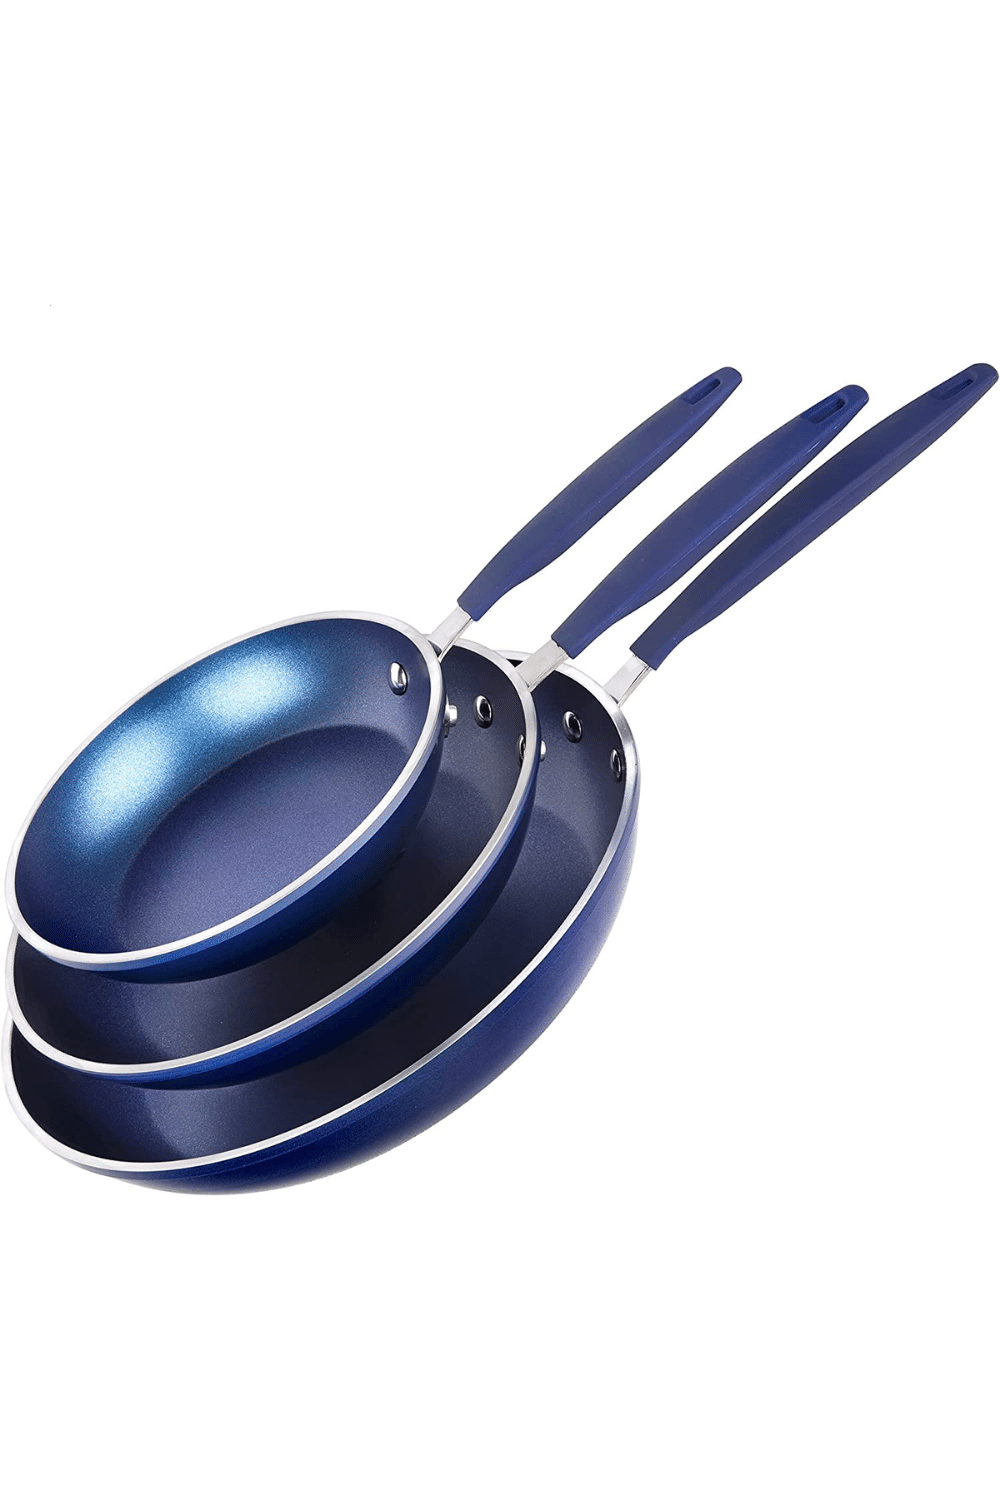 Your Kitchen’s New Best Friend: Granite Stone Blue Cookware!